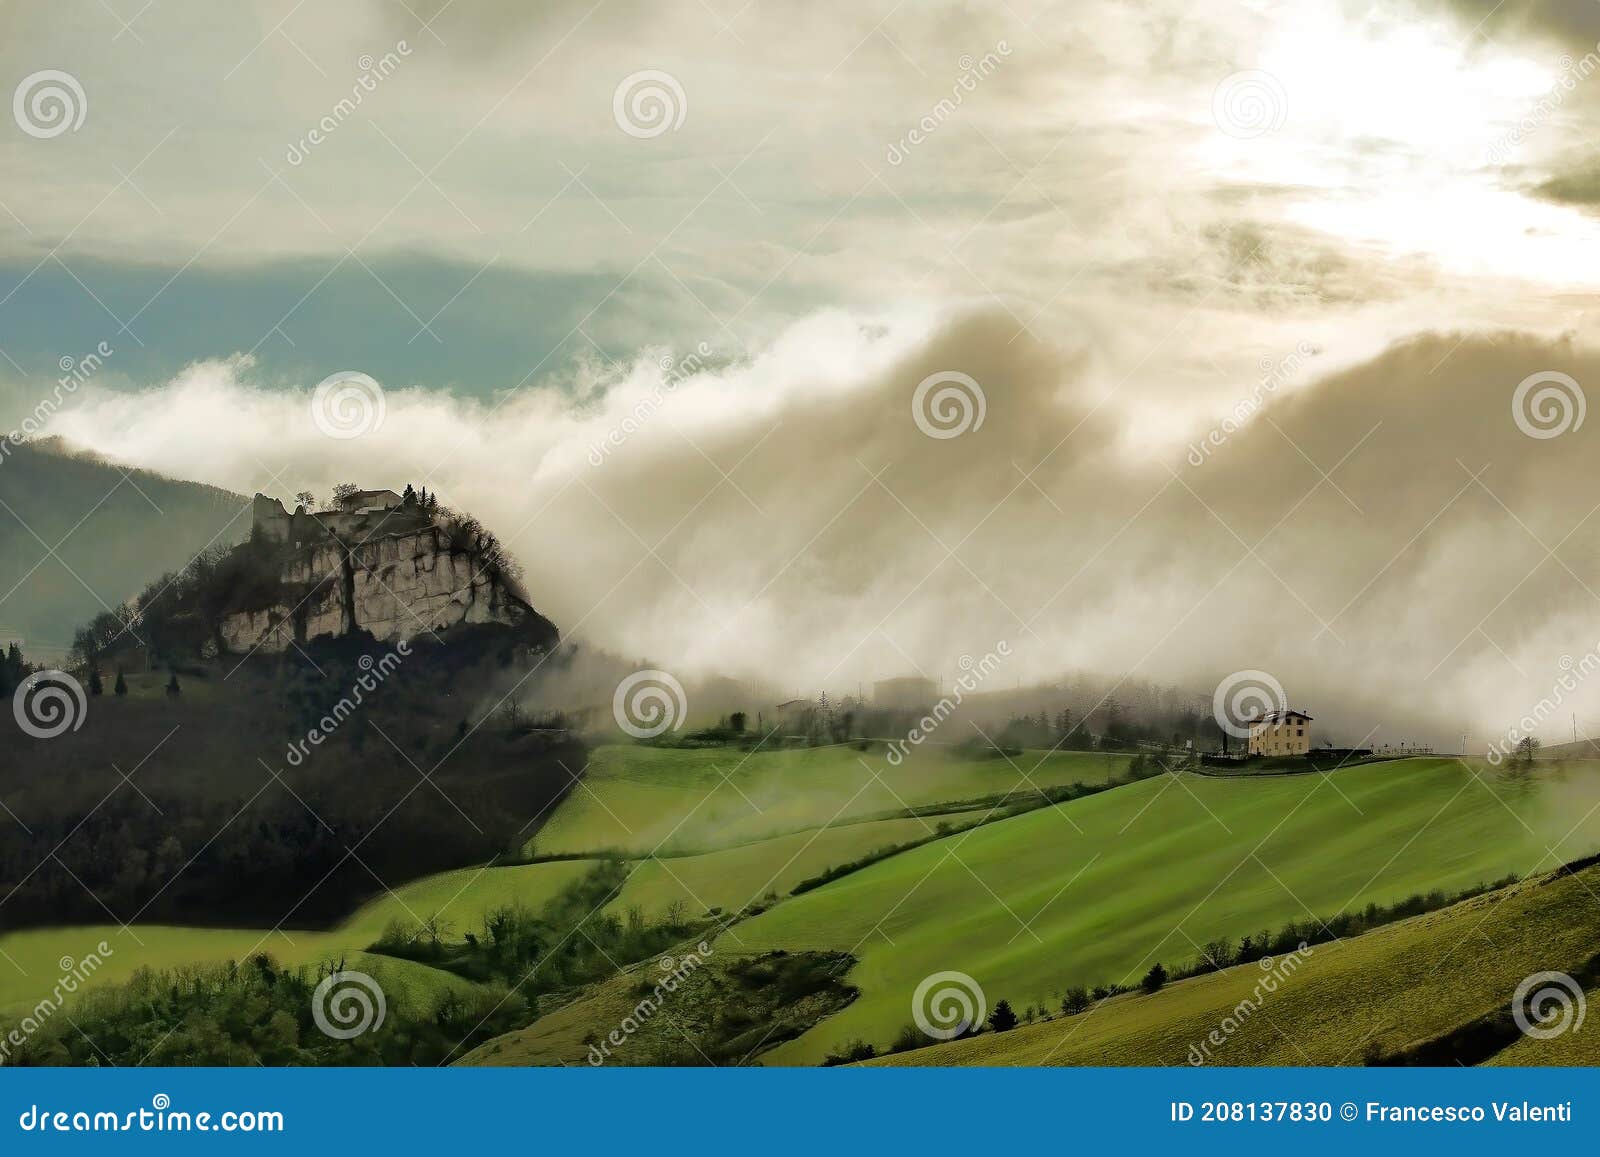 scenic fog coming on italian hills and canossa castle, emilia romagna